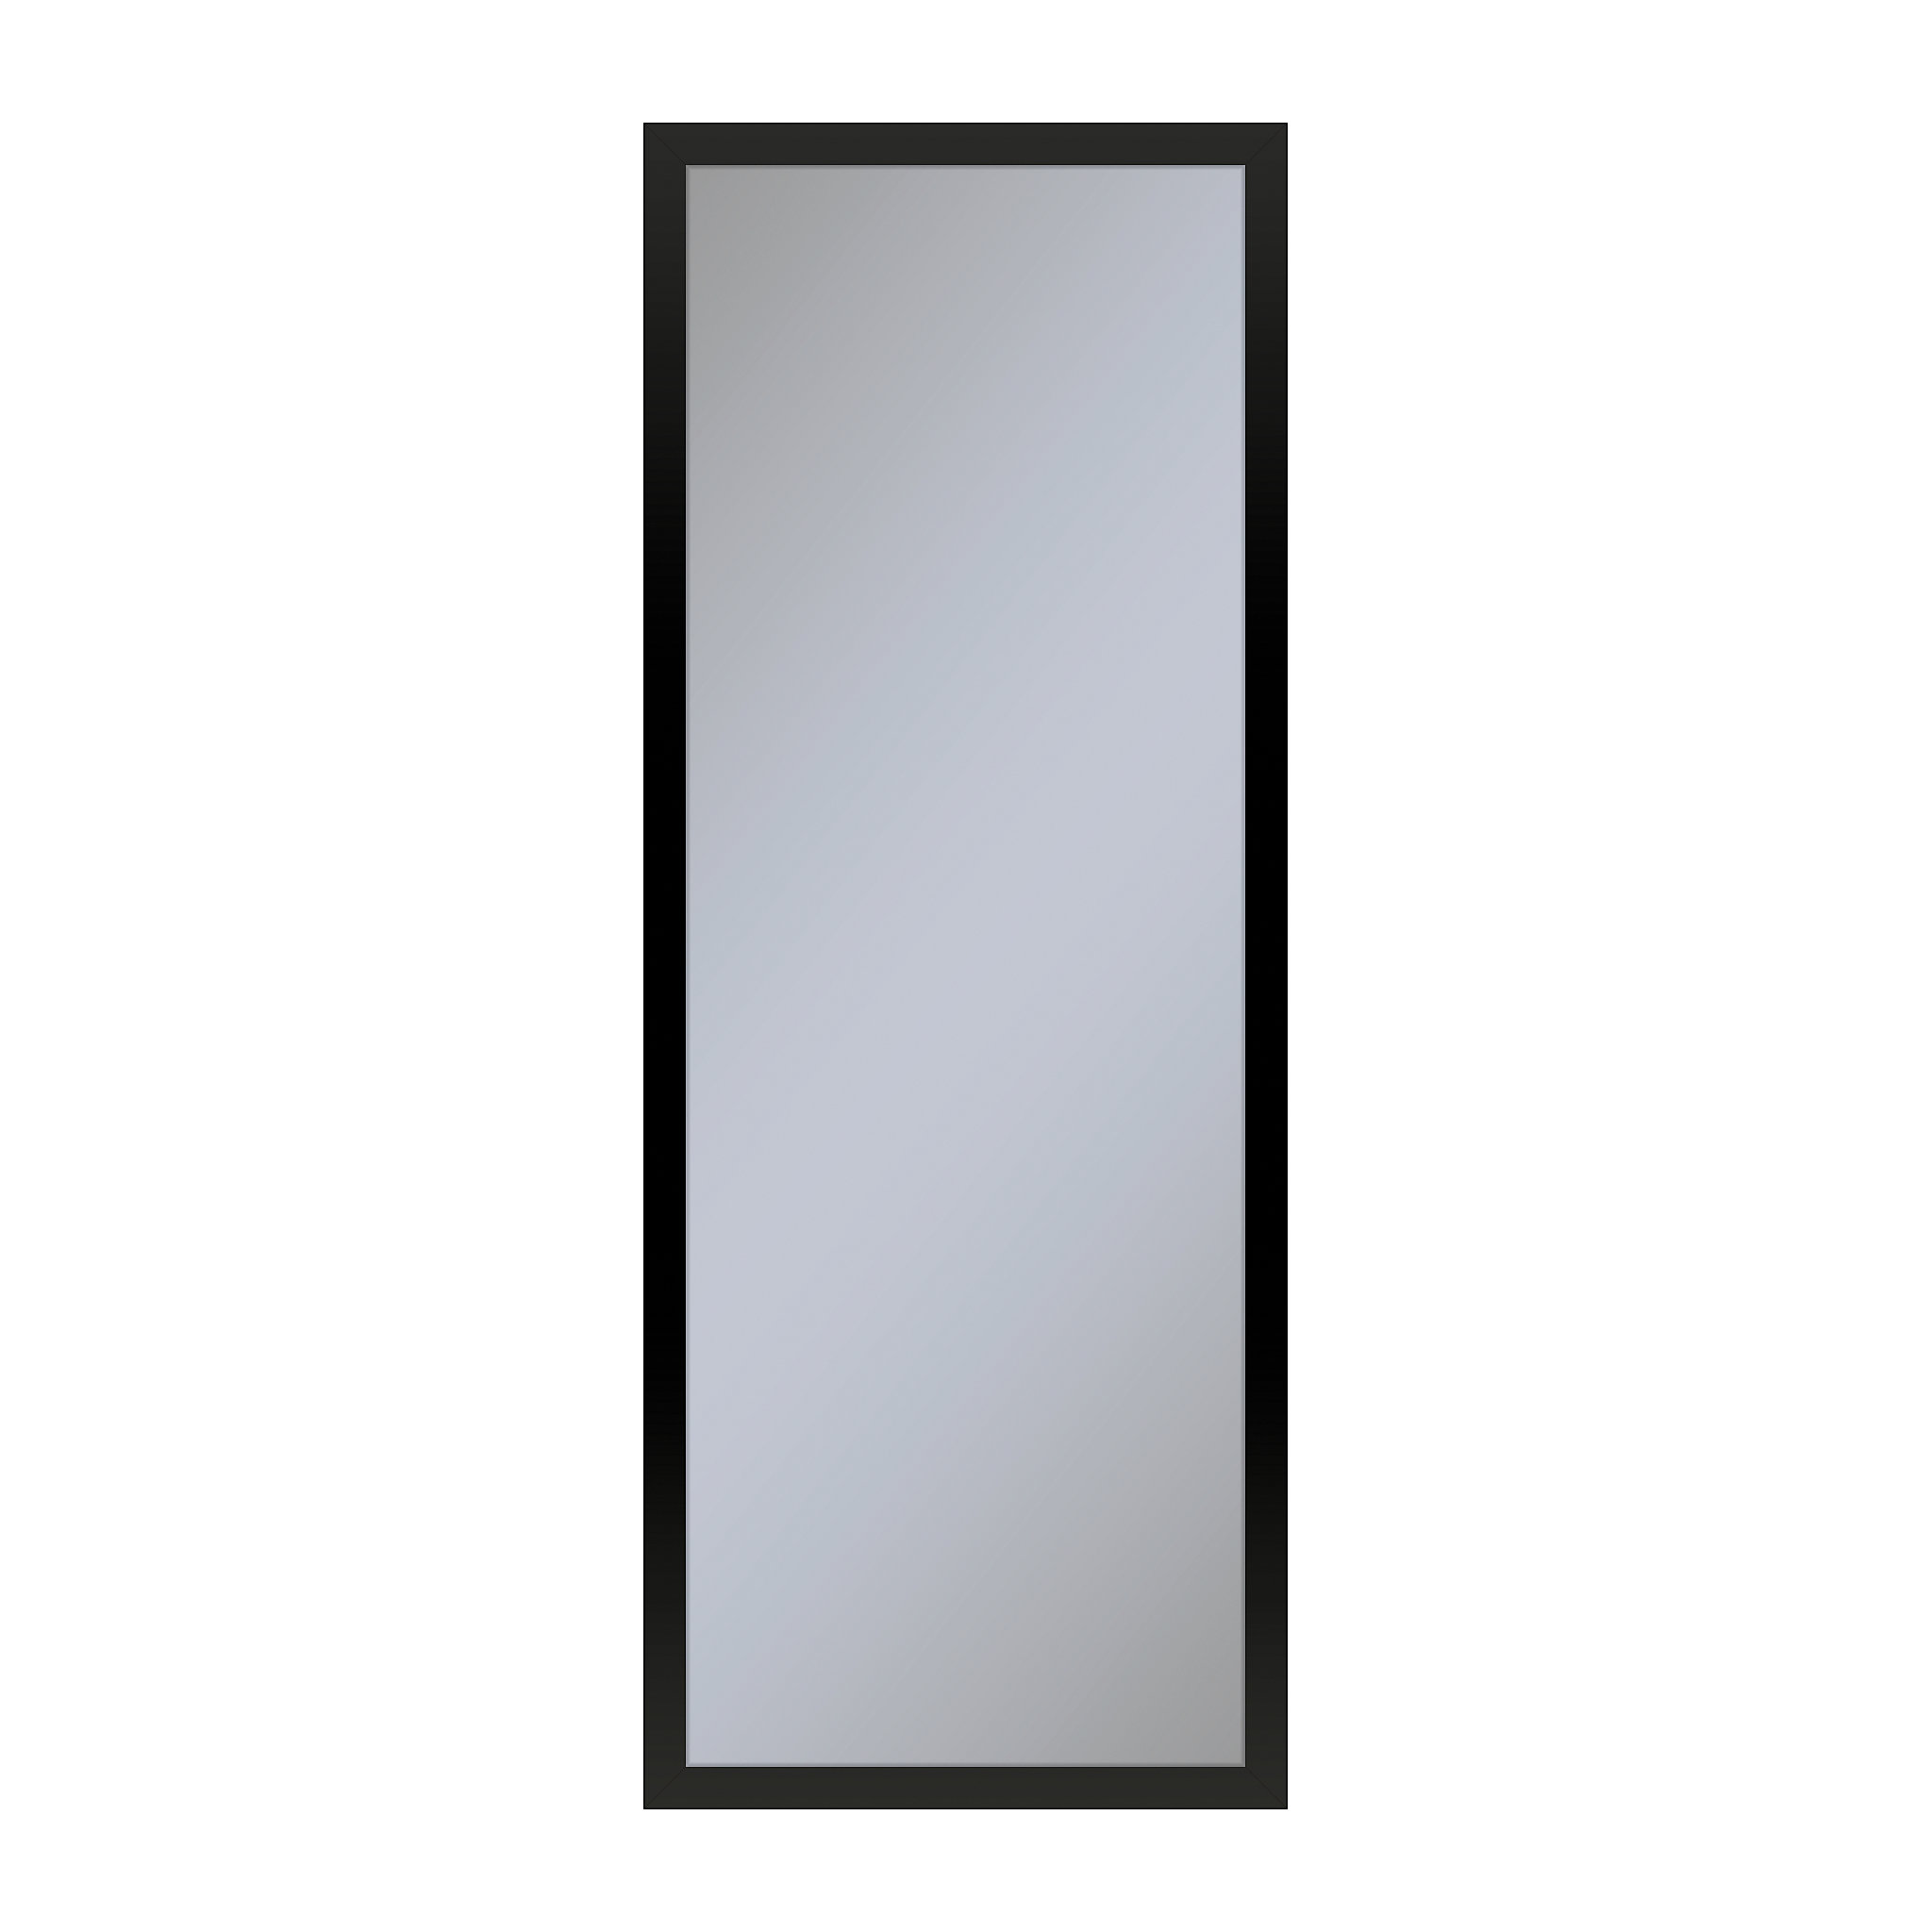 Robern PC1230D6TNN83 Profiles Framed Cabinet, 12" x 30" x 6", Matte Black, Non-Electric, Reversible Hinge